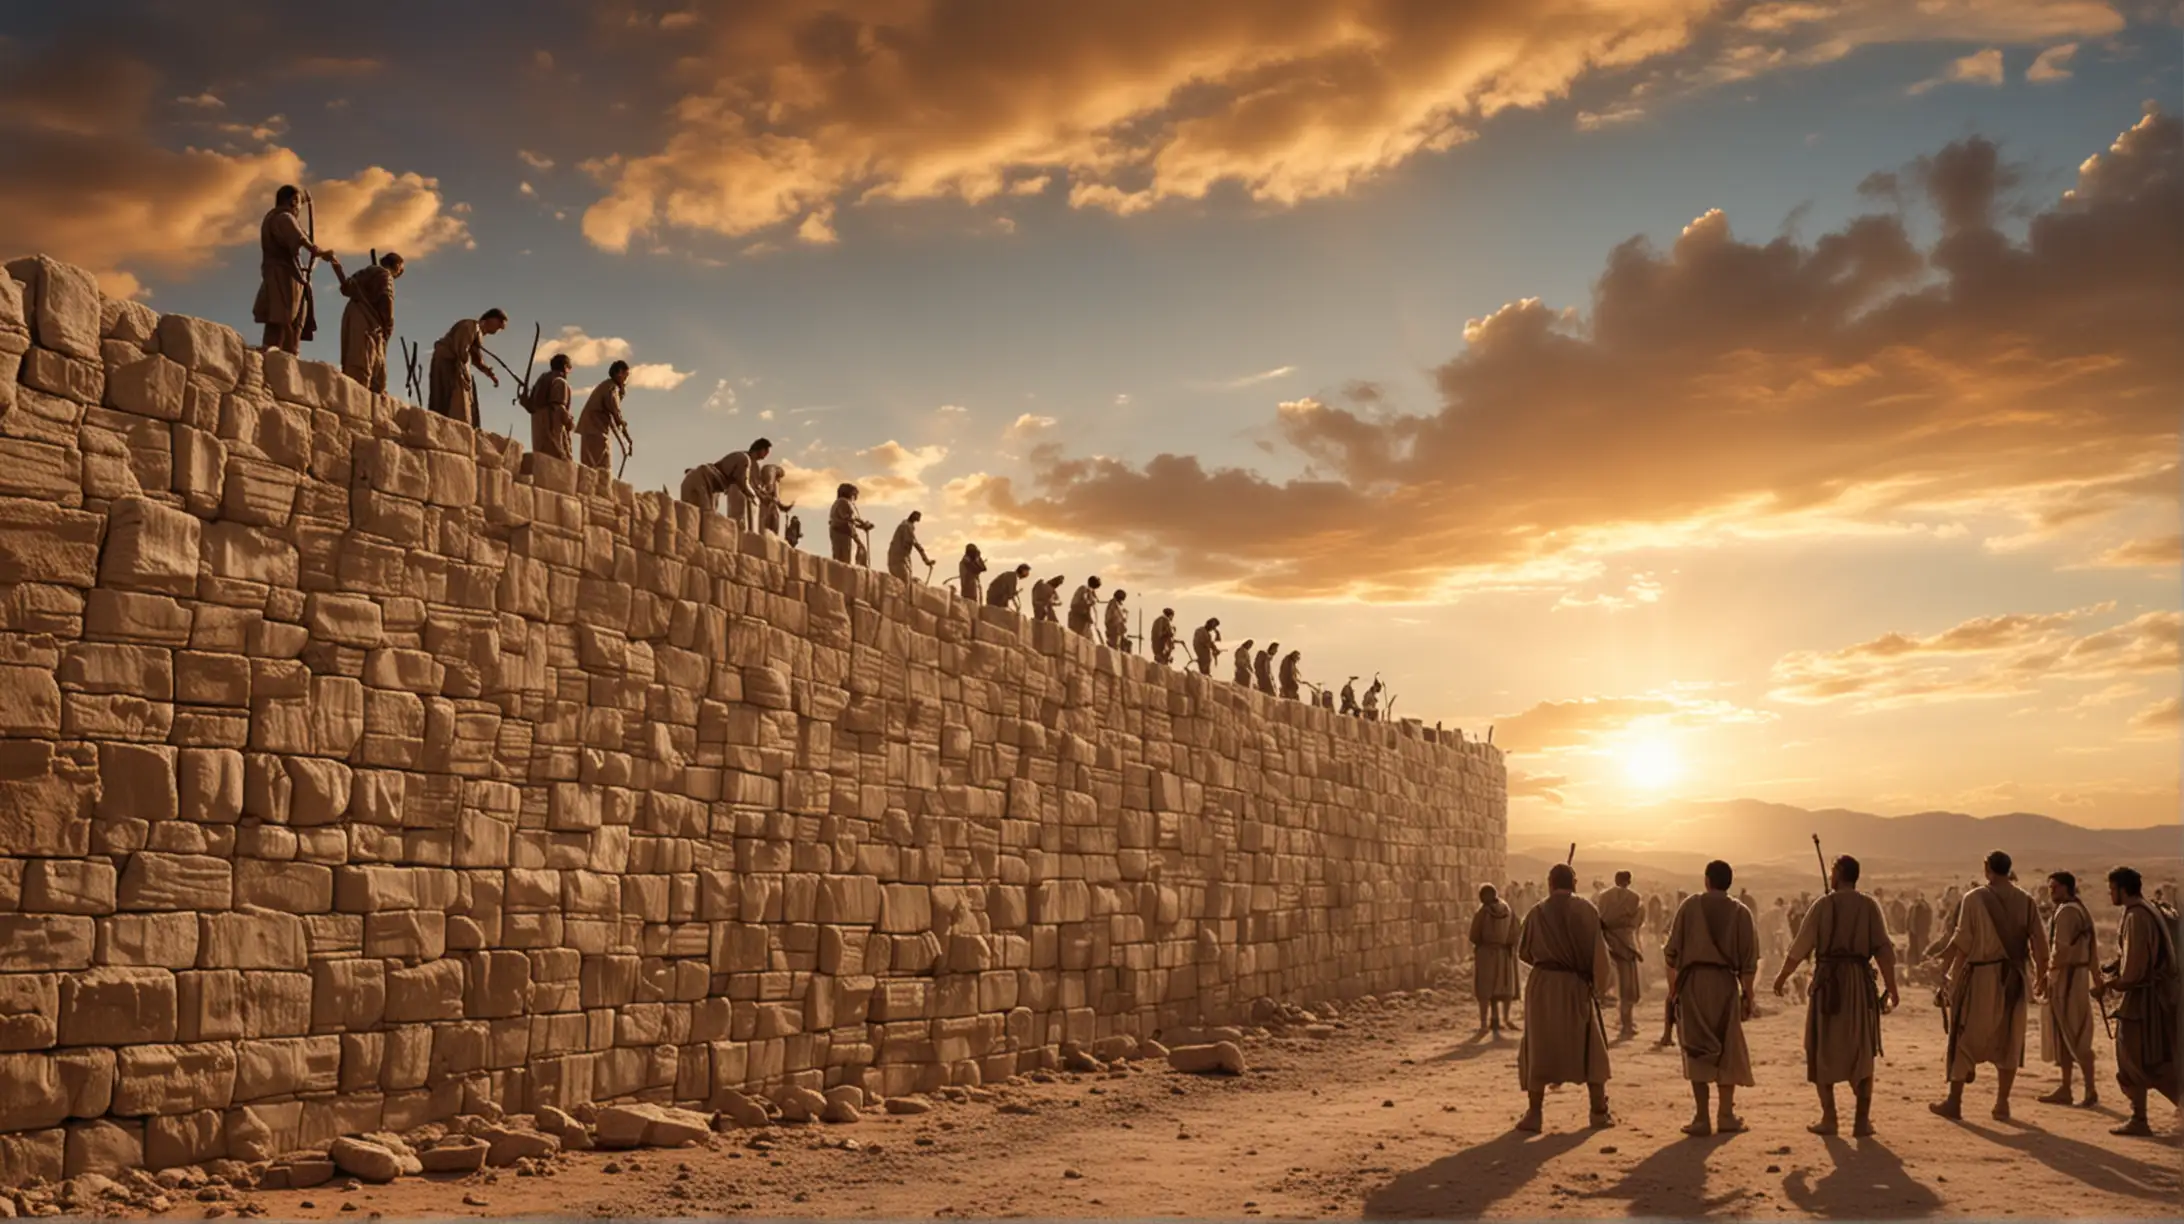 Men Building a Wall in a Desert City with Magnificent Sky Biblical Era Scene